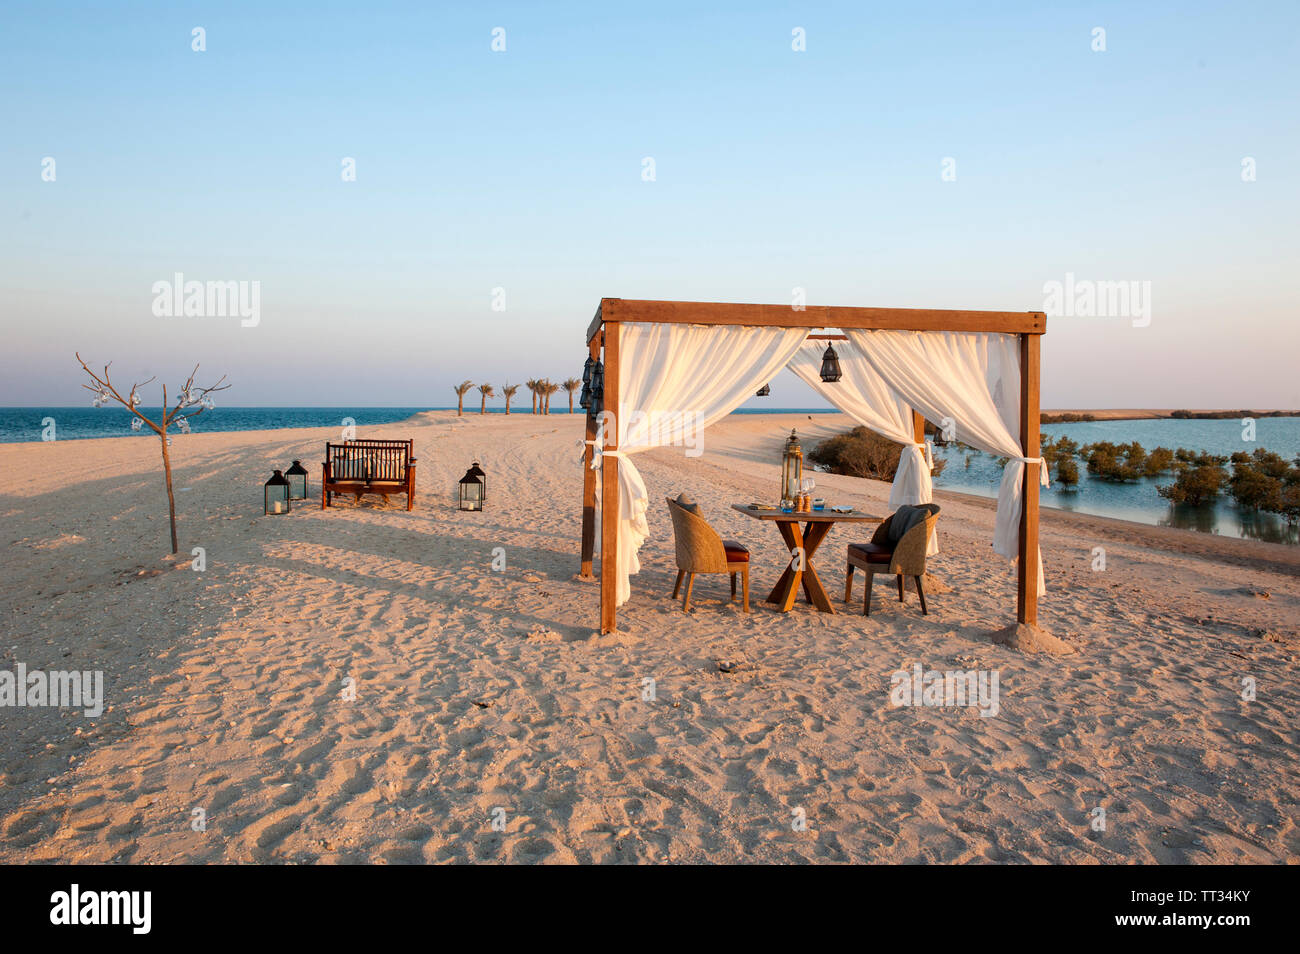 Dining by Design, private dining, at the Anantara Al Yamm Villa Resort on Sir Bani Yas, United Arab Emirates. Stock Photo